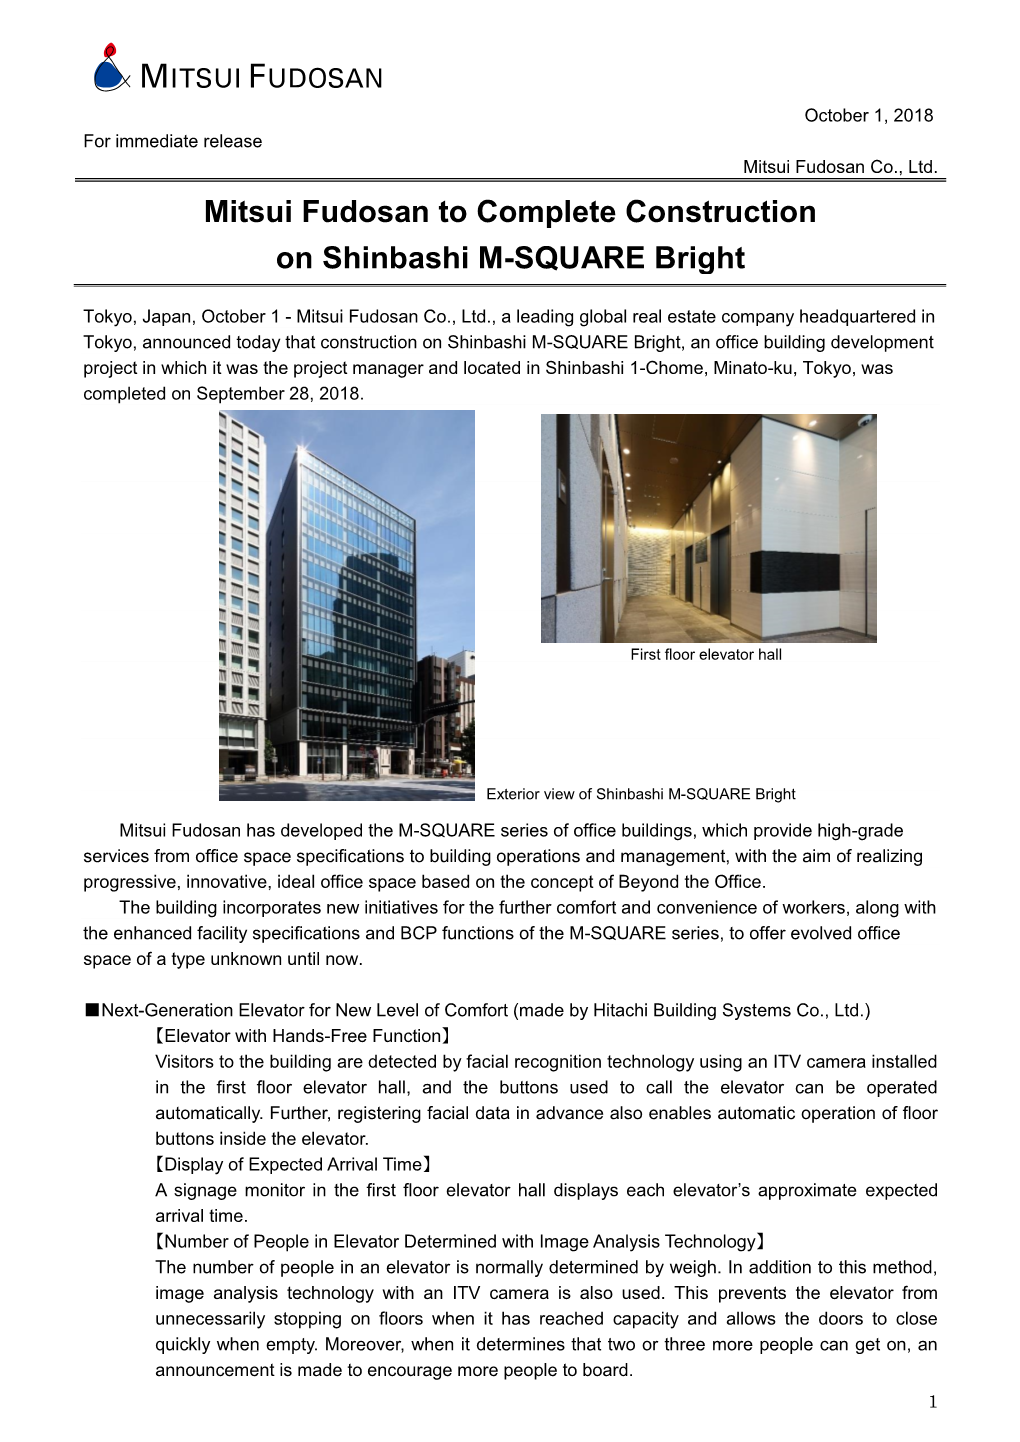 Mitsui Fudosan to Complete Construction on Shinbashi M-SQUARE Bright